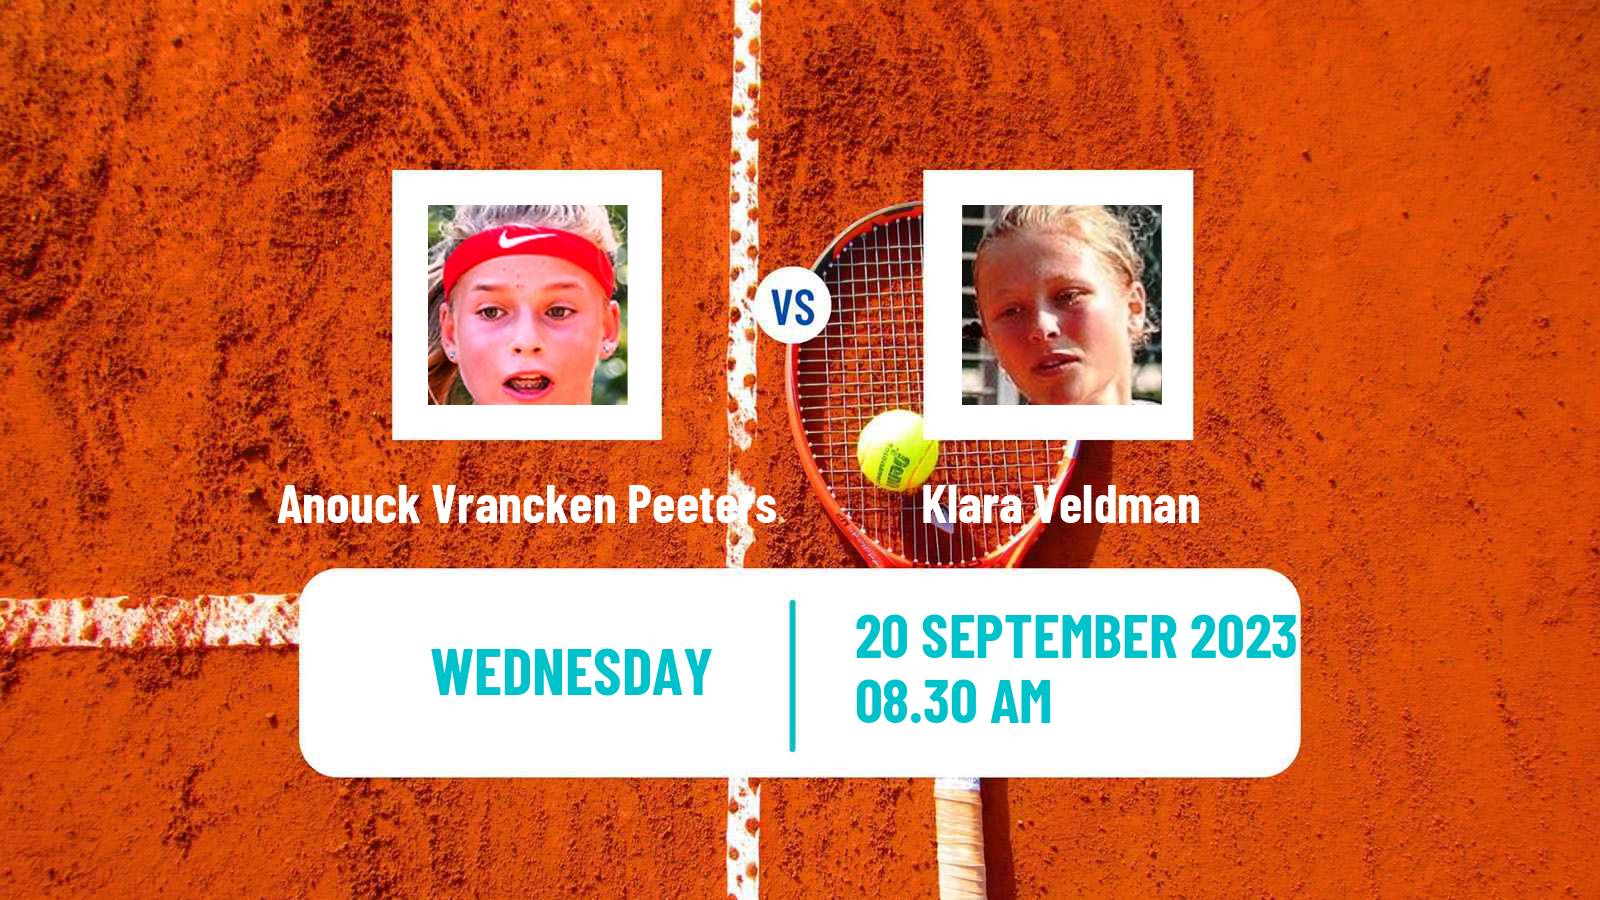 Tennis ITF W15 Sharm Elsheikh 11 Women Anouck Vrancken Peeters - Klara Veldman